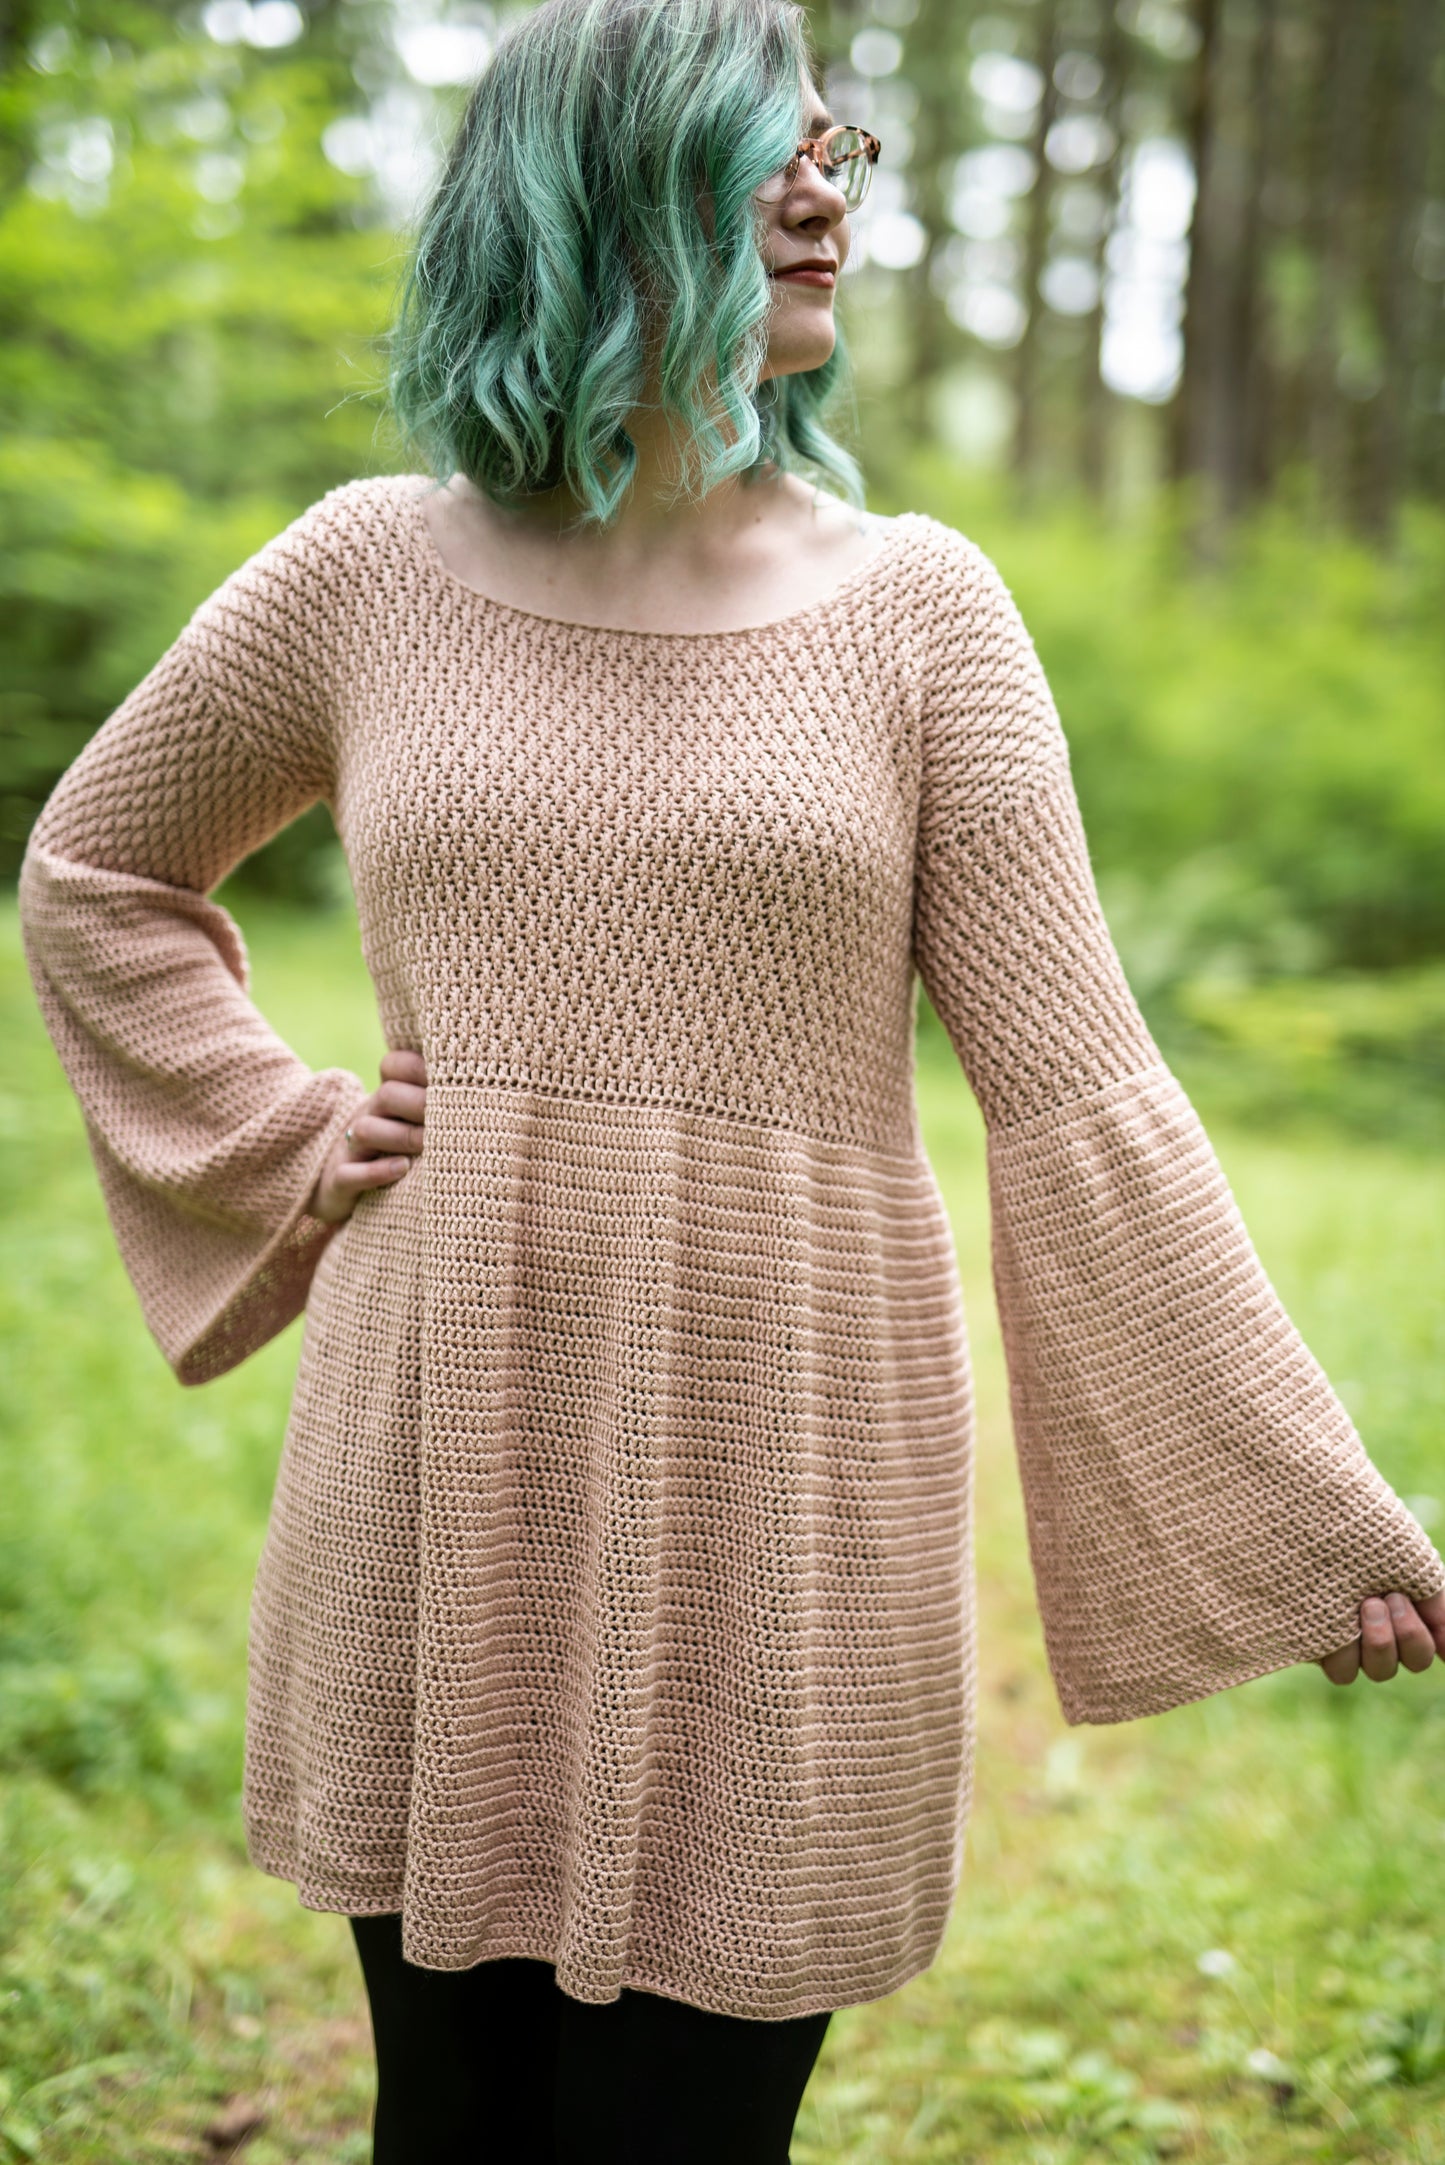 Crochet Pattern: The Dove Dress